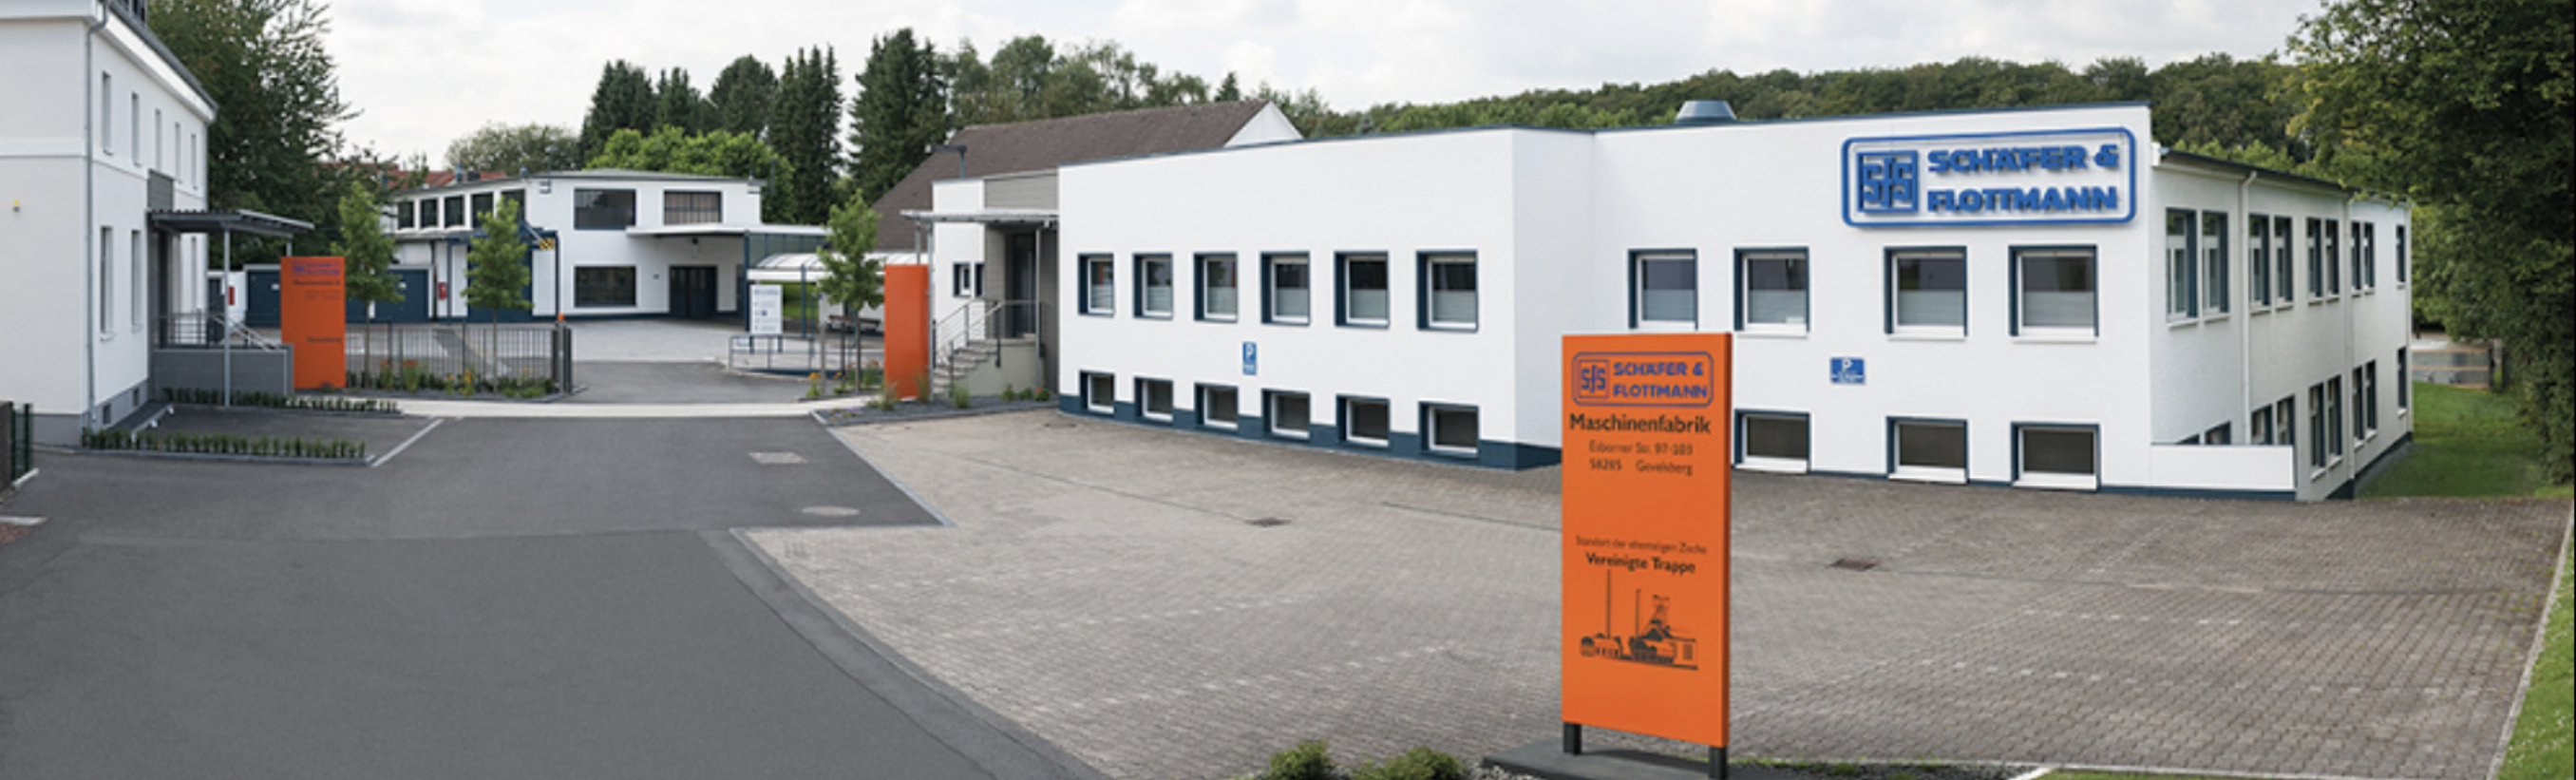 Schäfer & Flottmann GmbH & Co. KG